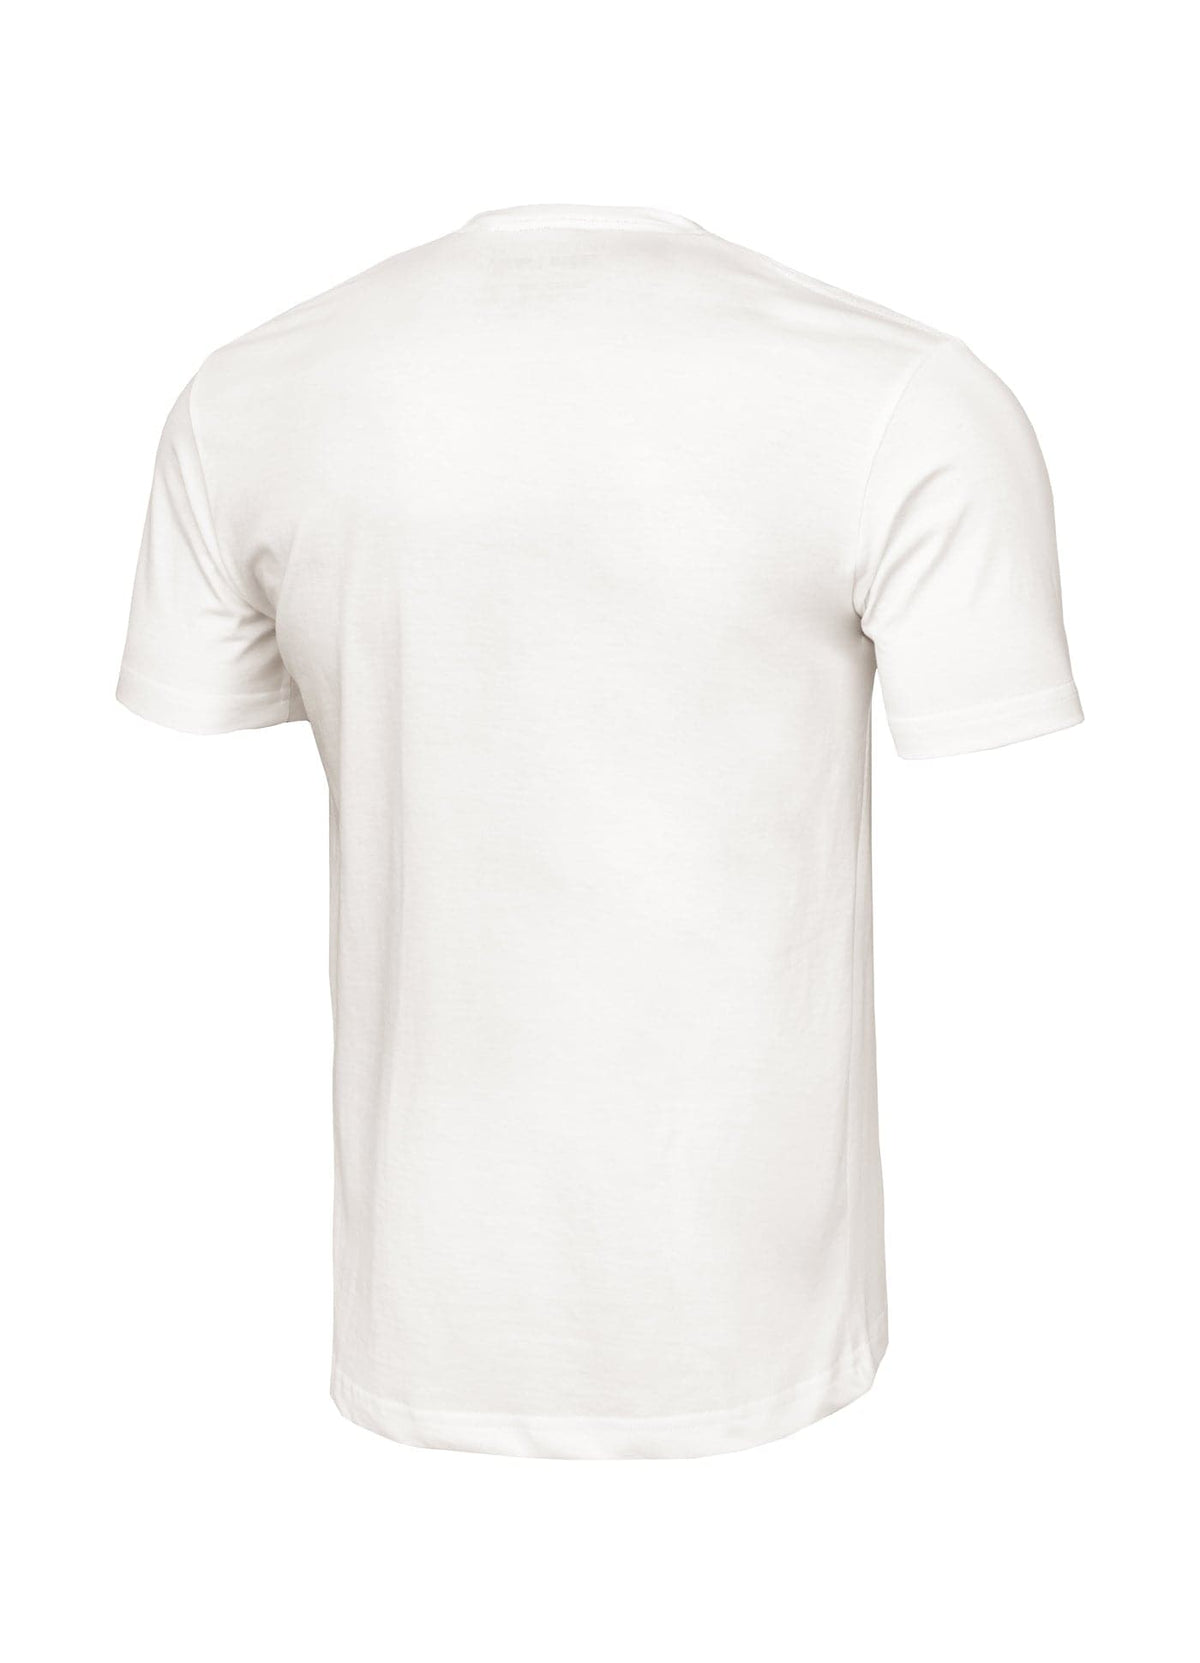 Koszulka USA CAL Off White - kup z Pitbull West Coast Oficjalny Sklep 